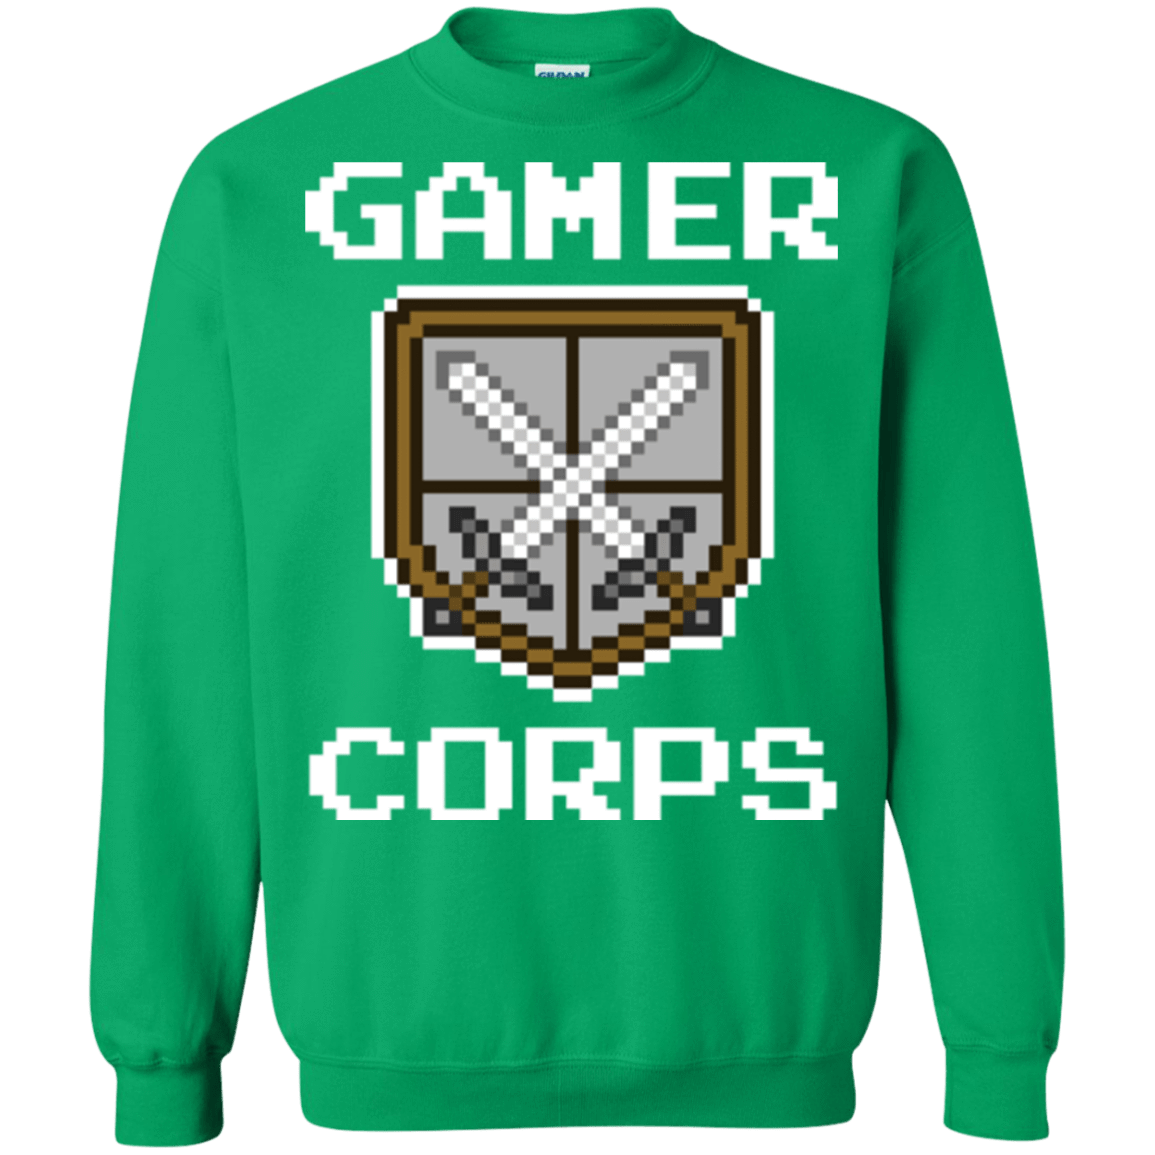 Sweatshirts Irish Green / Small Gamer corps Crewneck Sweatshirt